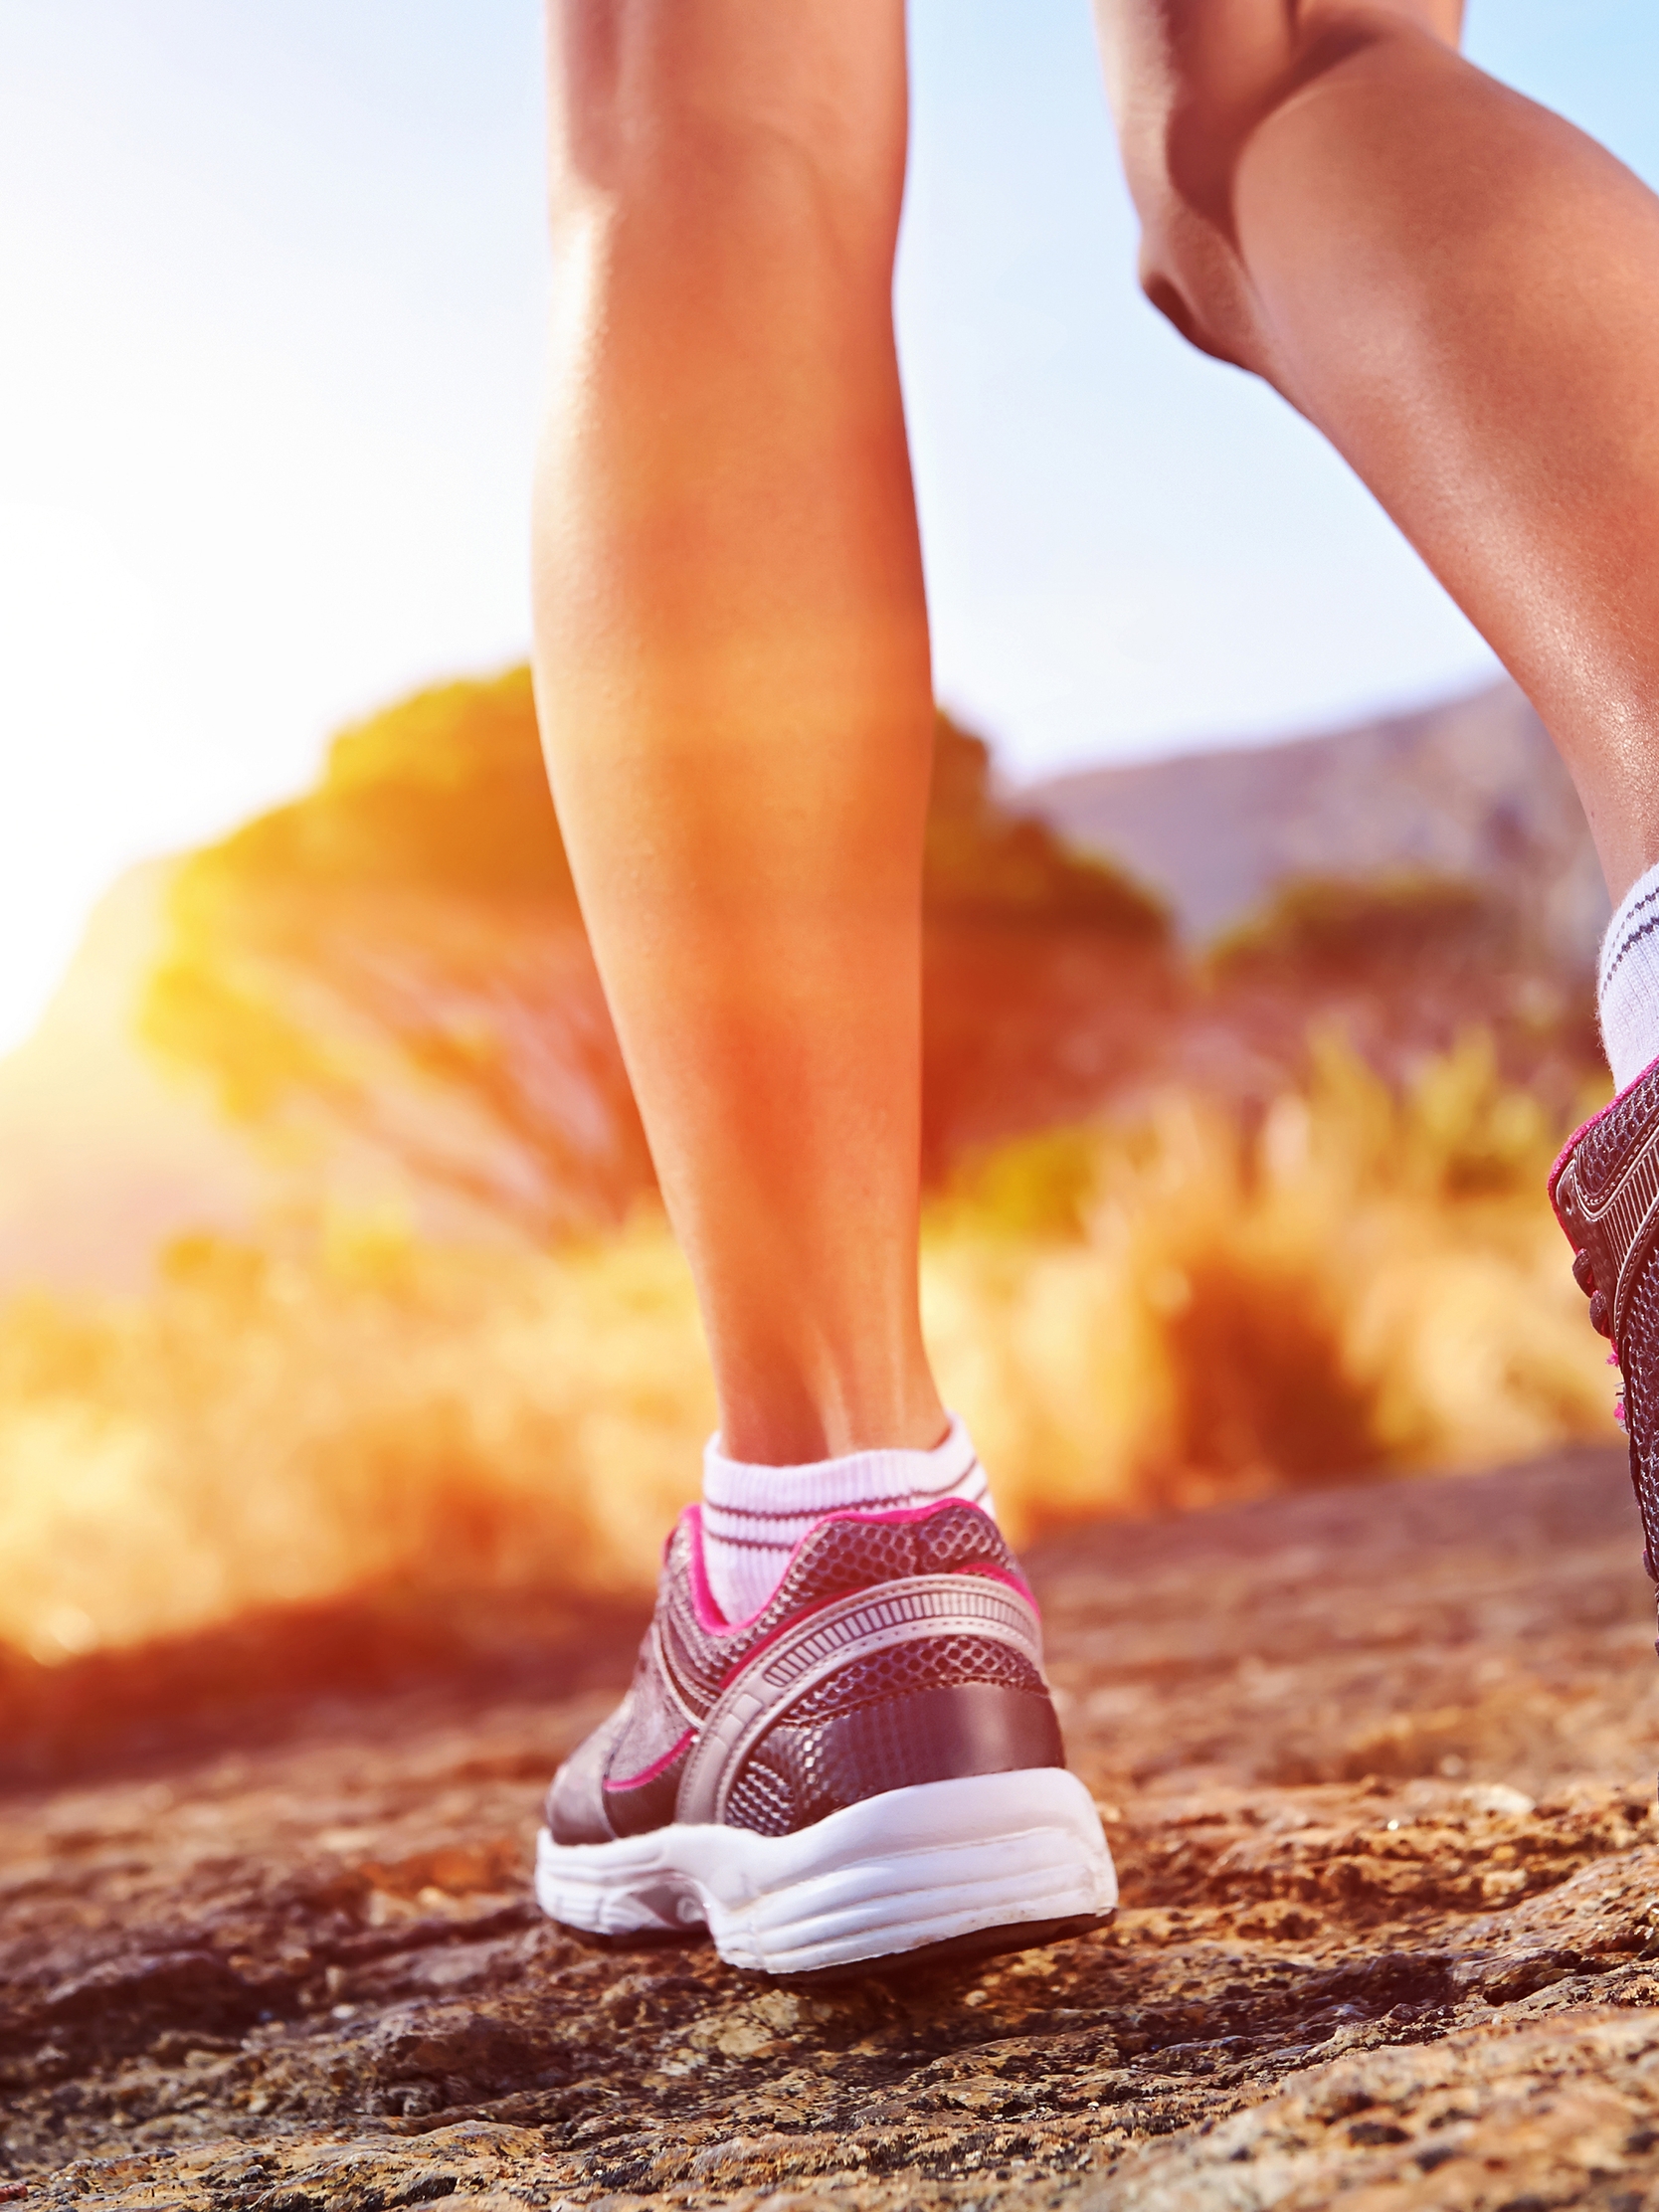 Картинка: Ходьба, бег, спортсмен, ноги, кроссовки, дорога